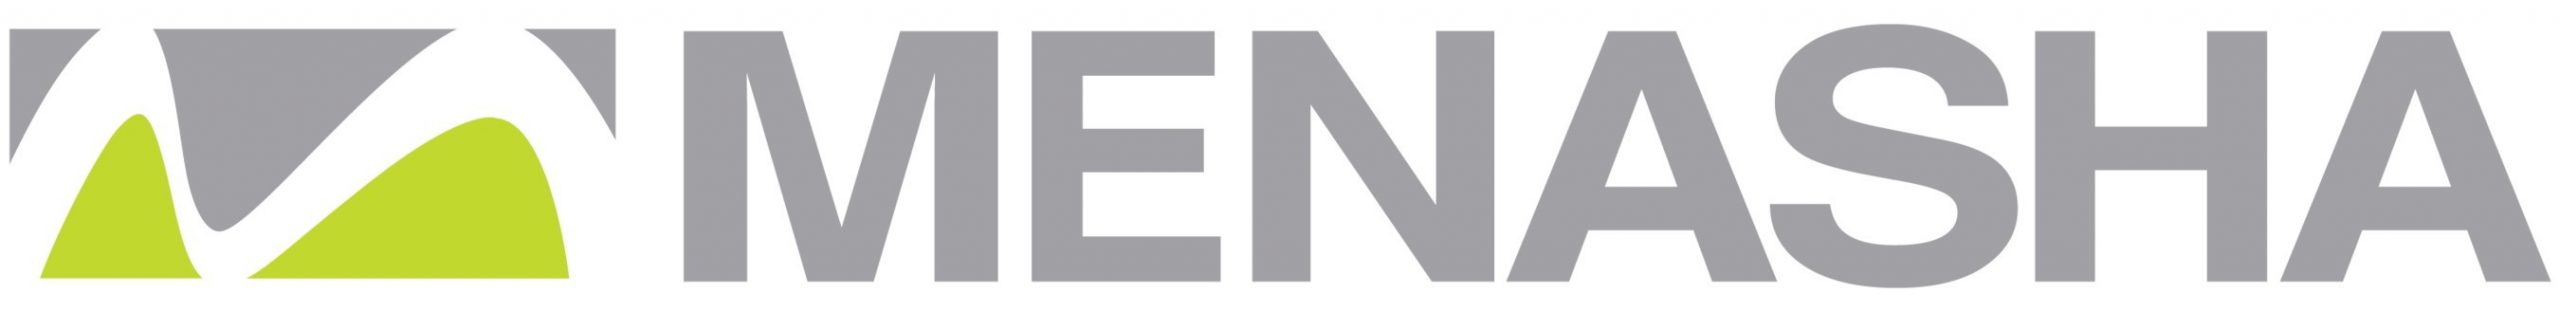 Menasha_Logo